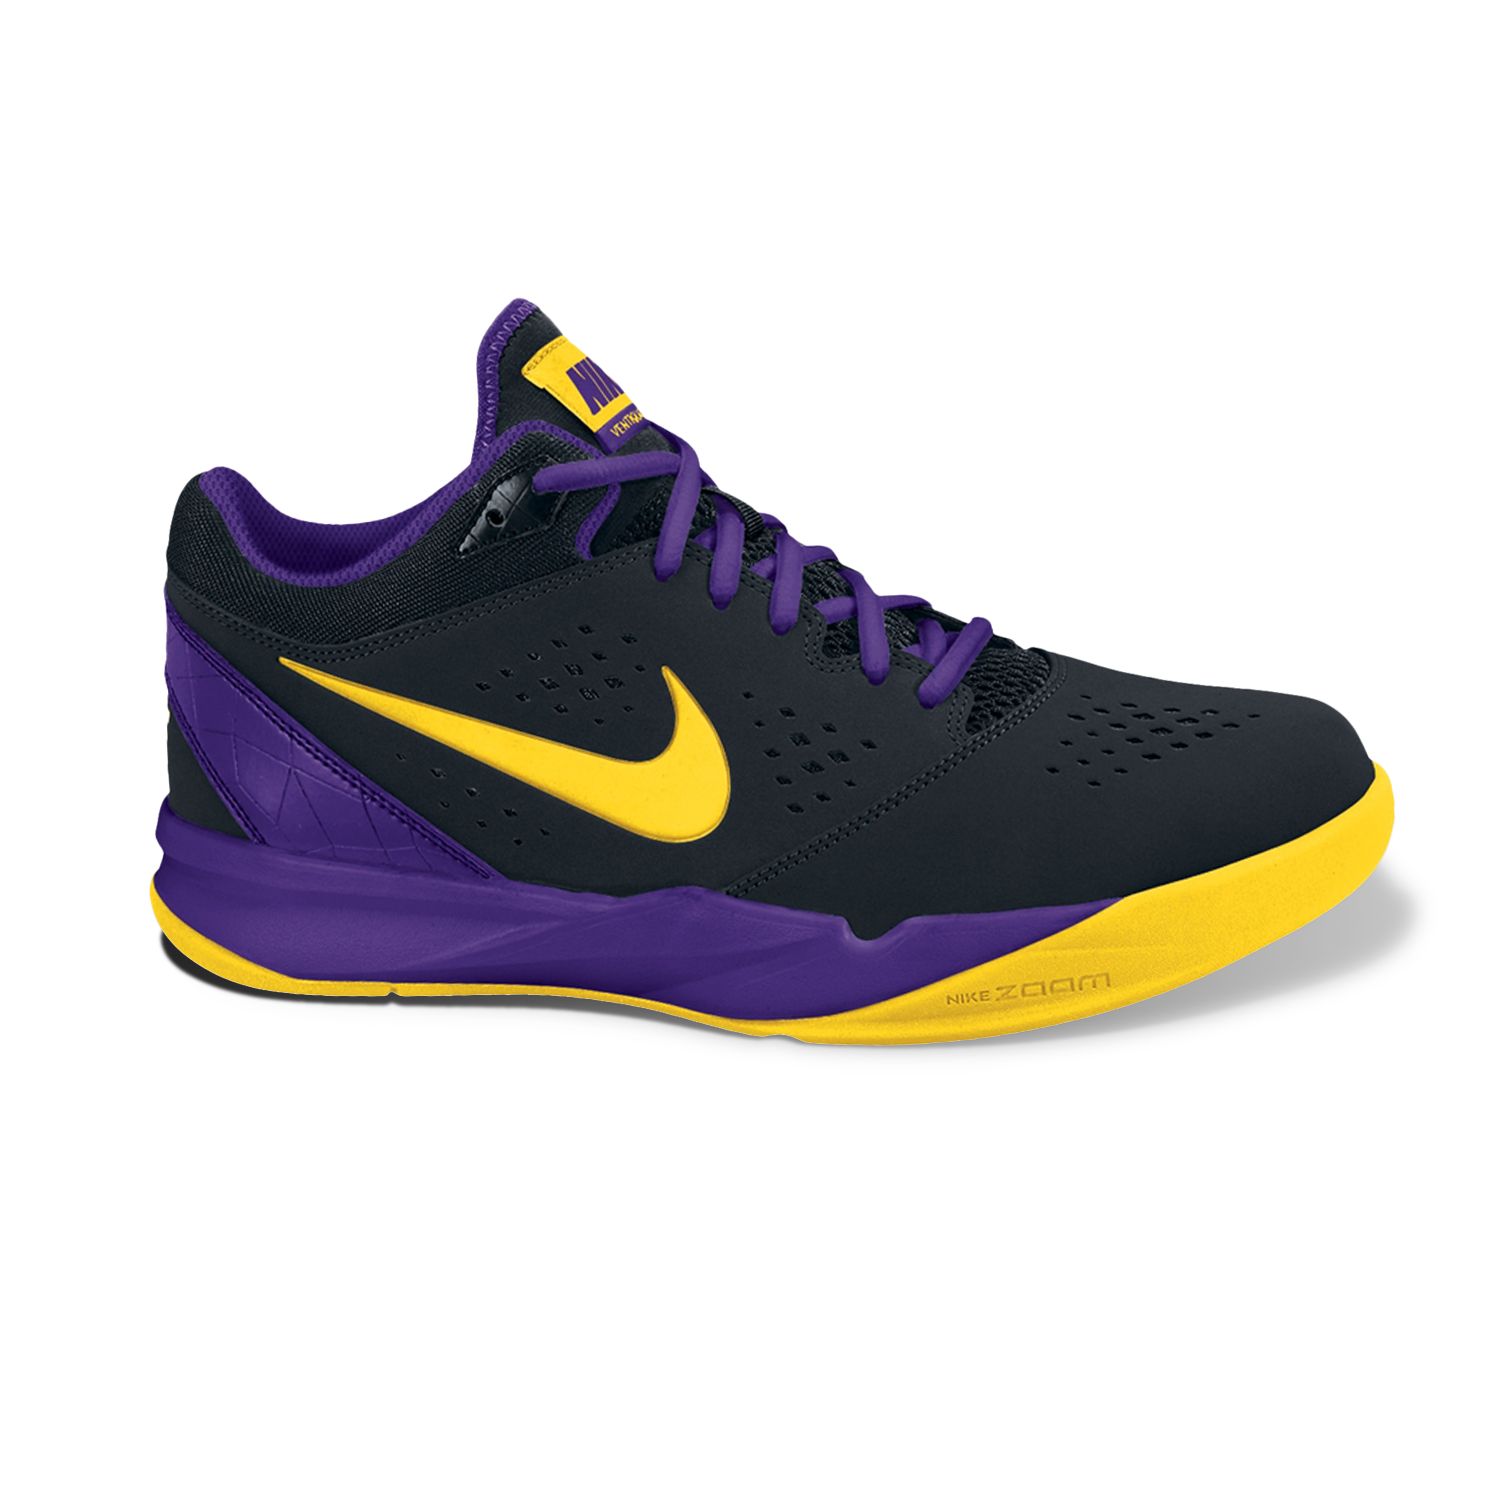 Nike Zoom Attero Basketball Shoes - Men